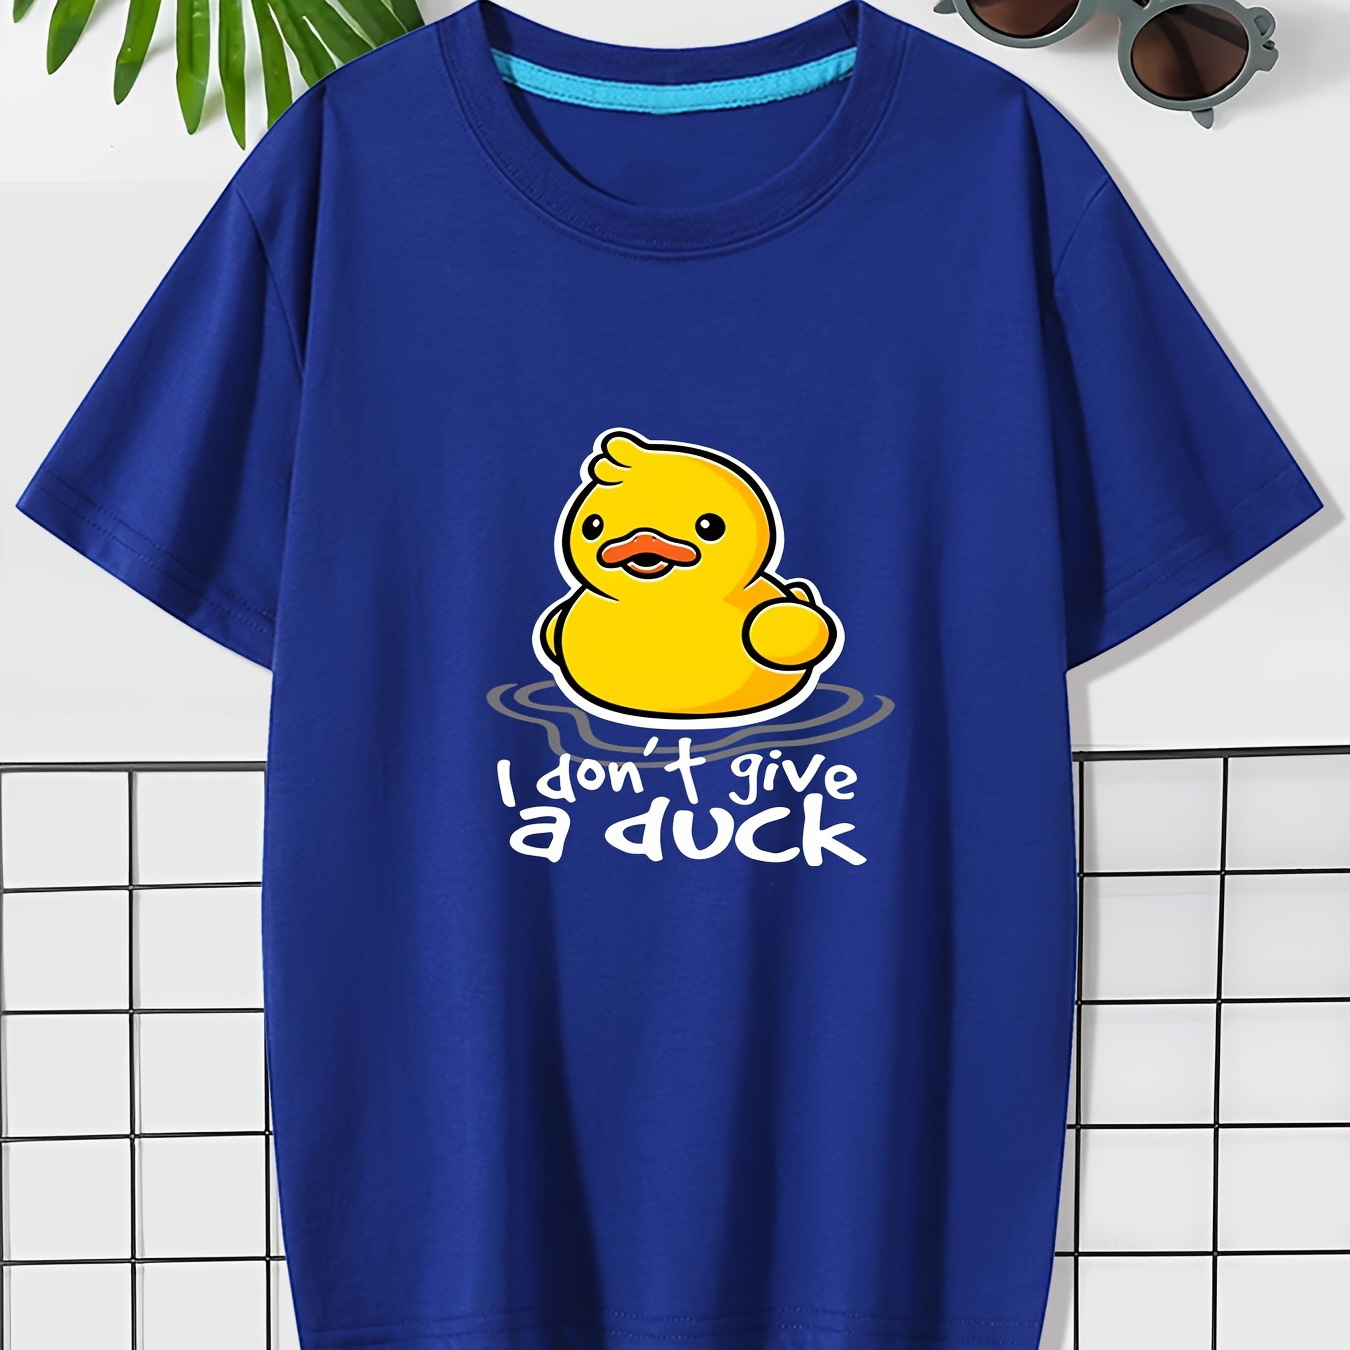 

Cartoon Duck Print Short Sleeve Crew Neck T-shirt, Casual Spring Summer Tee Tops, Boy's Clothing